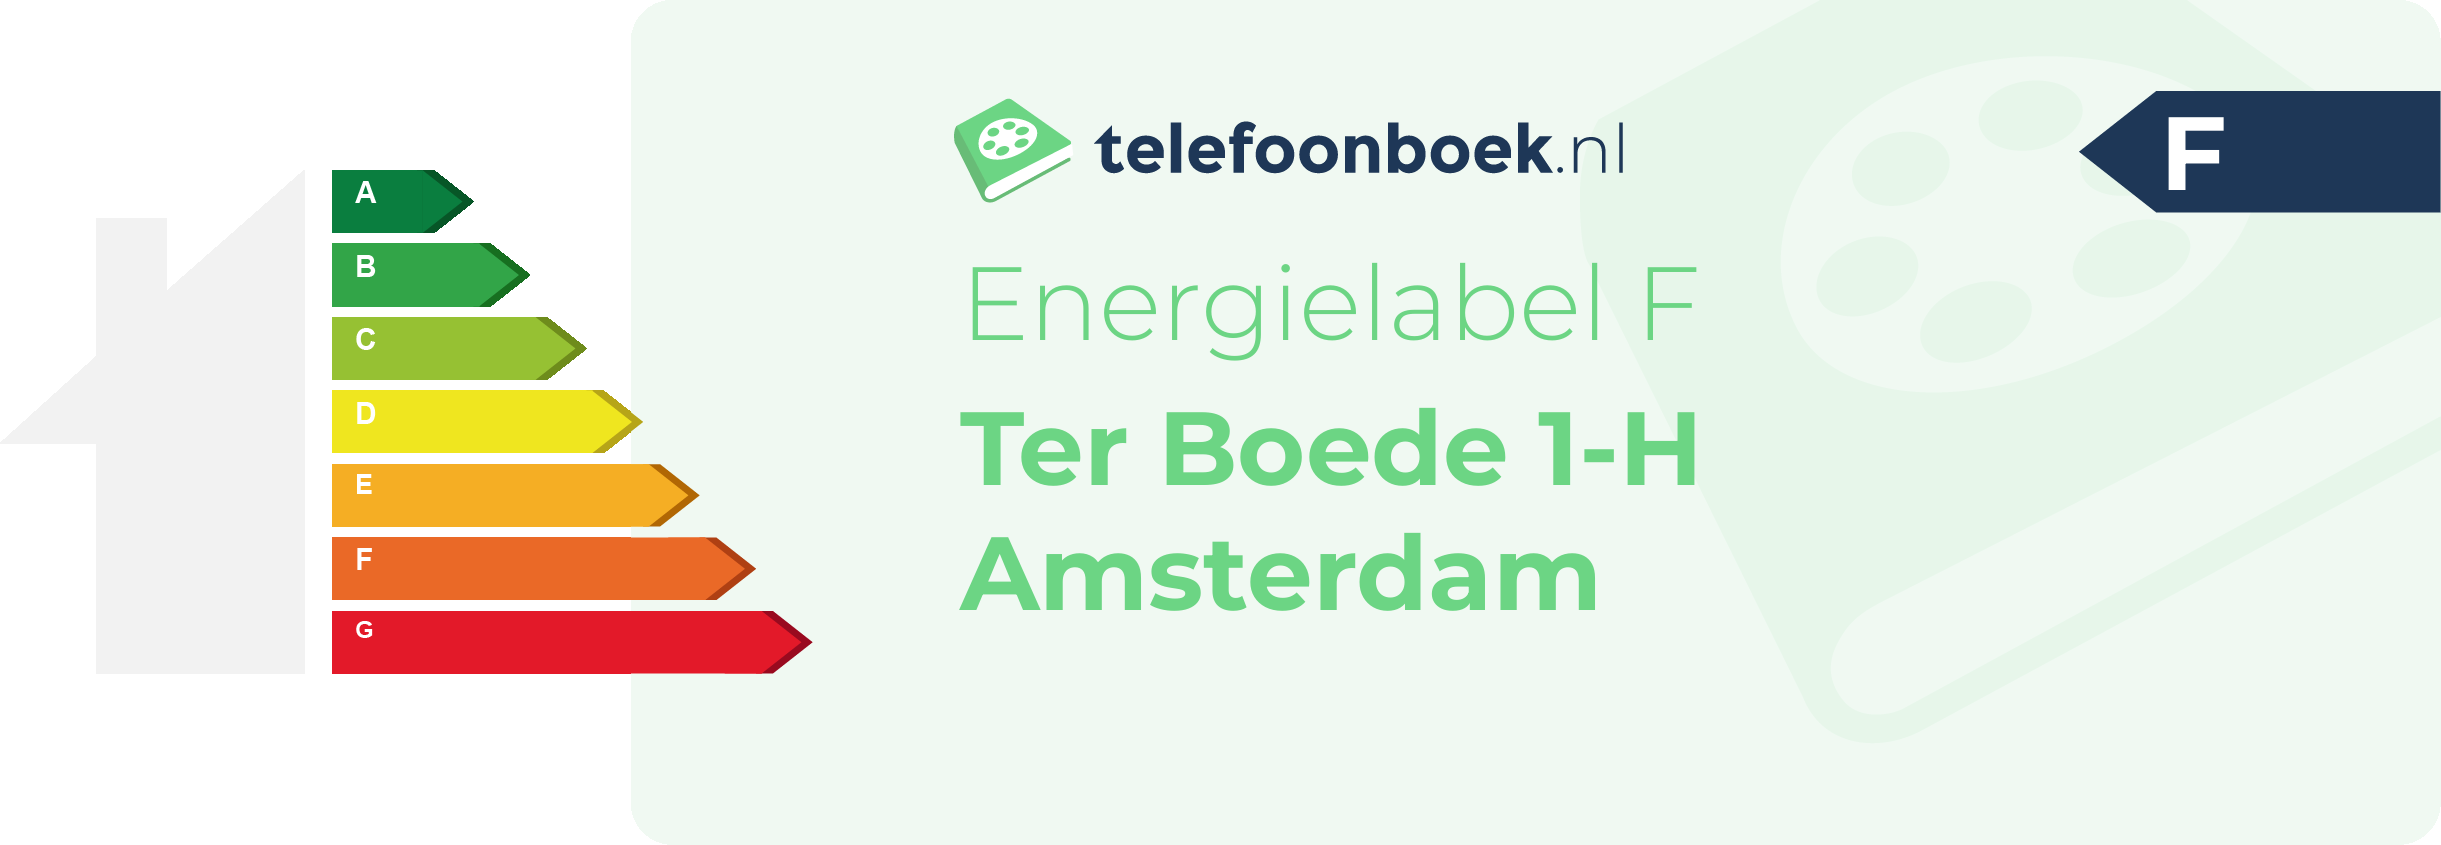 Energielabel Ter Boede 1-H Amsterdam